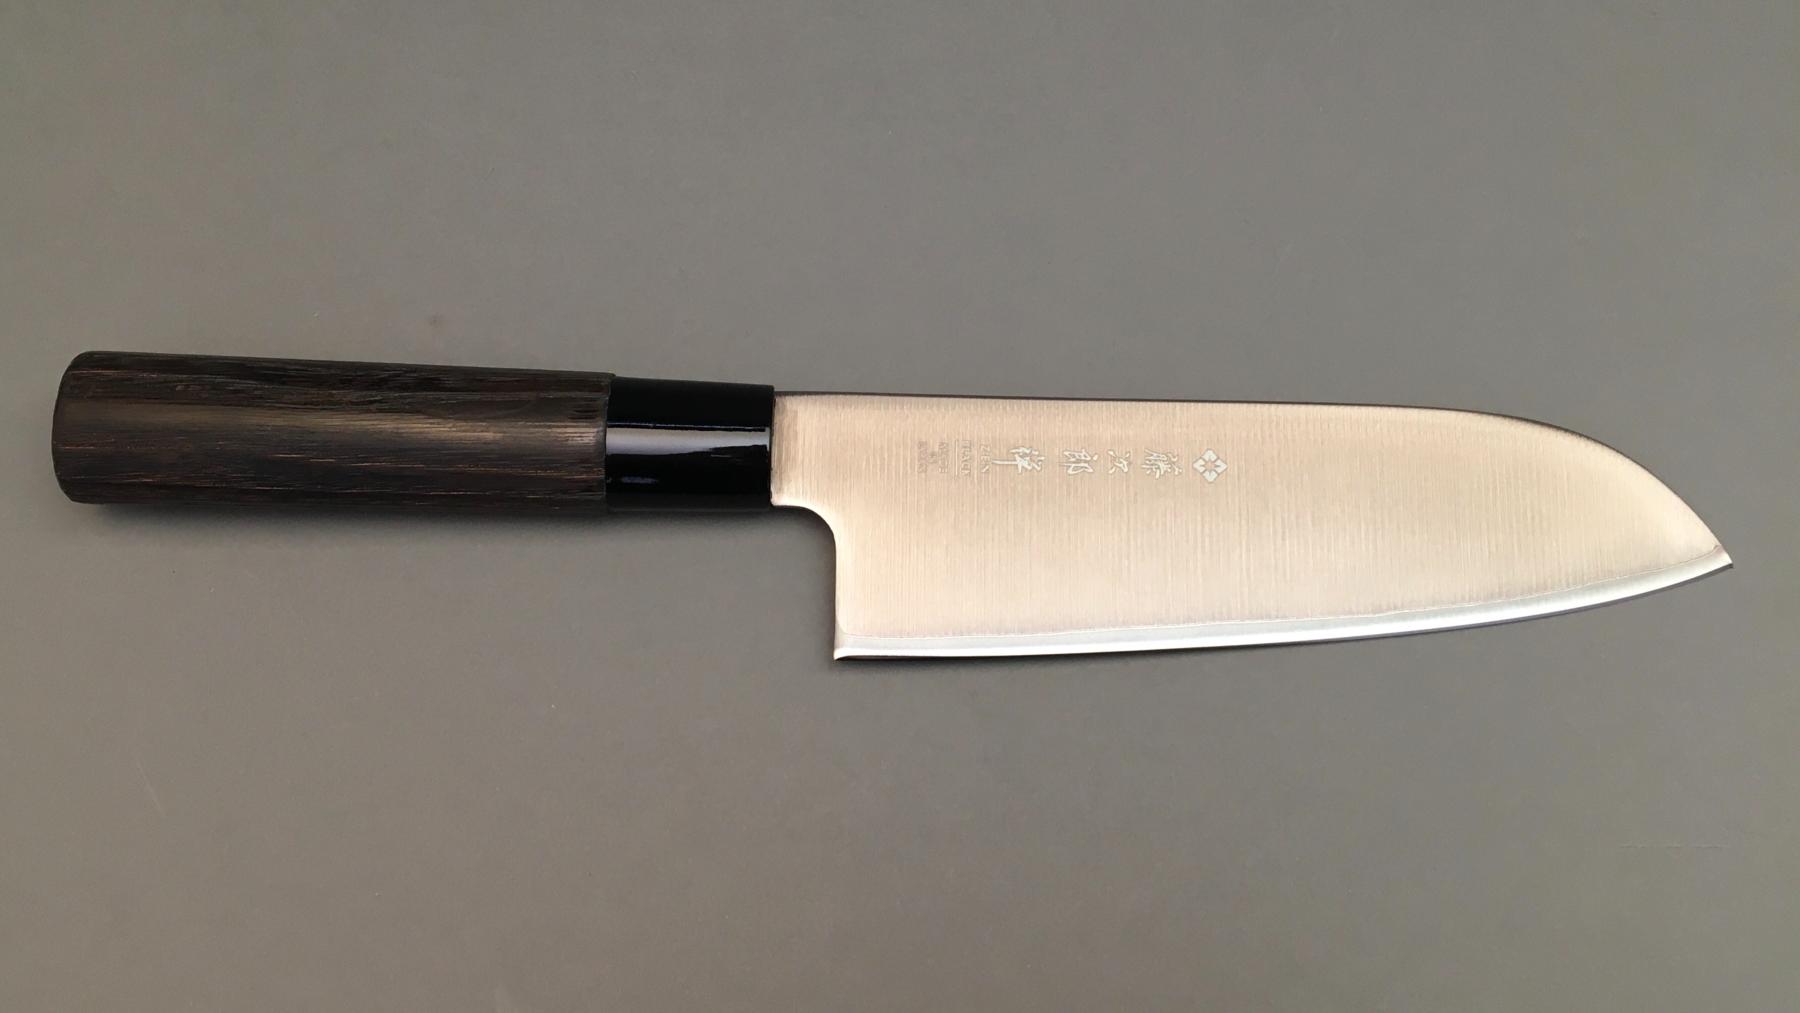 Couteau japonais Zen Black Tojiro Santoku 17 cm